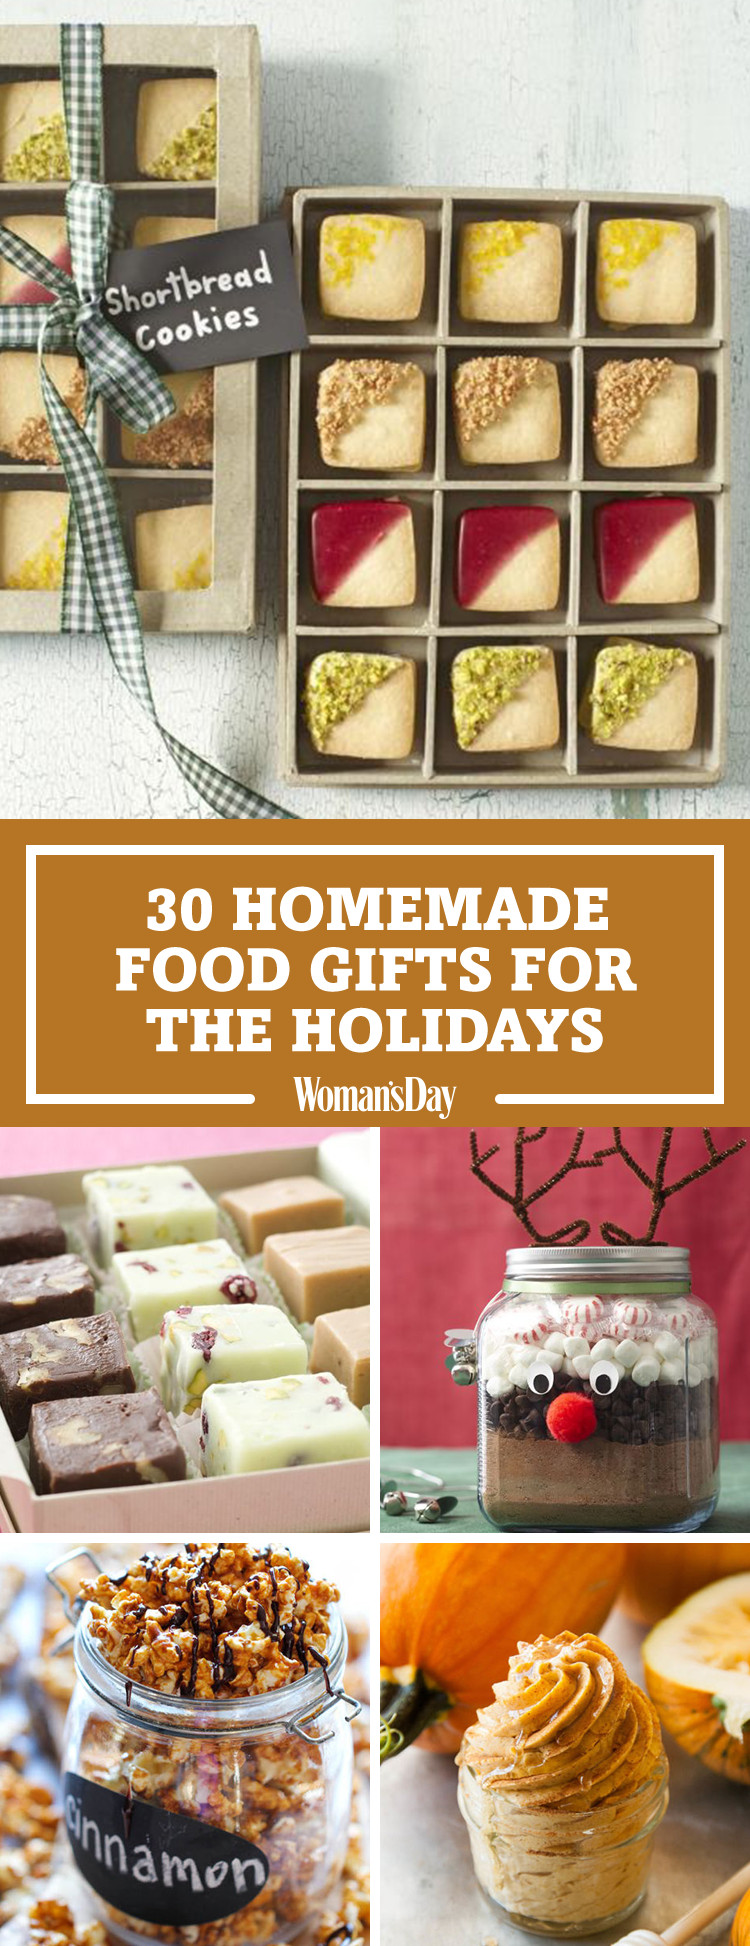 Easy Christmas Food Gifts
 35 Homemade Christmas Food Gifts Best Edible Holiday